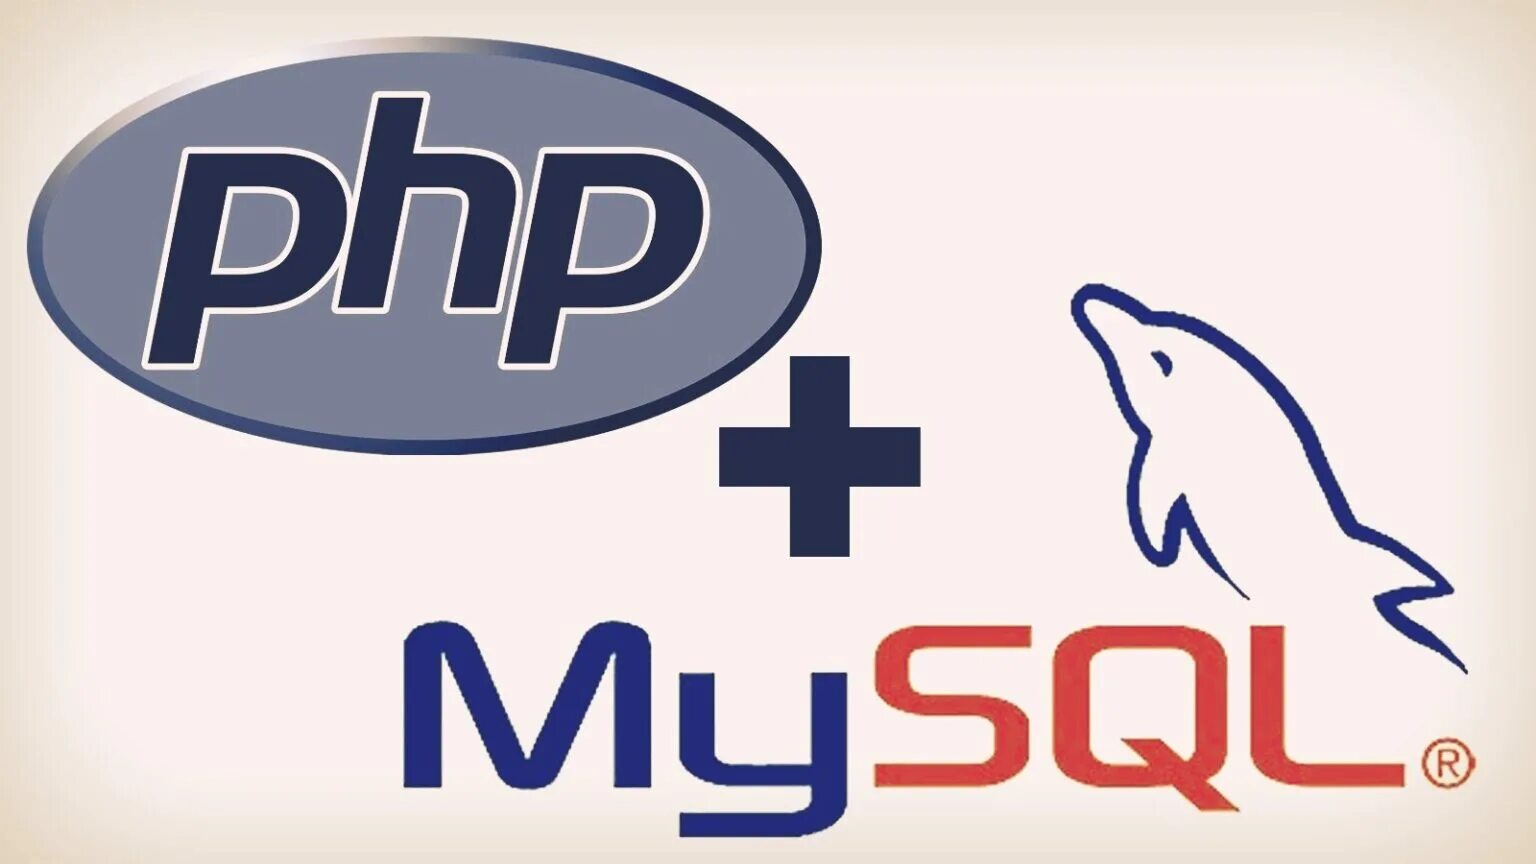 Php. Php логотип. Php язык программирования. Php картинка.